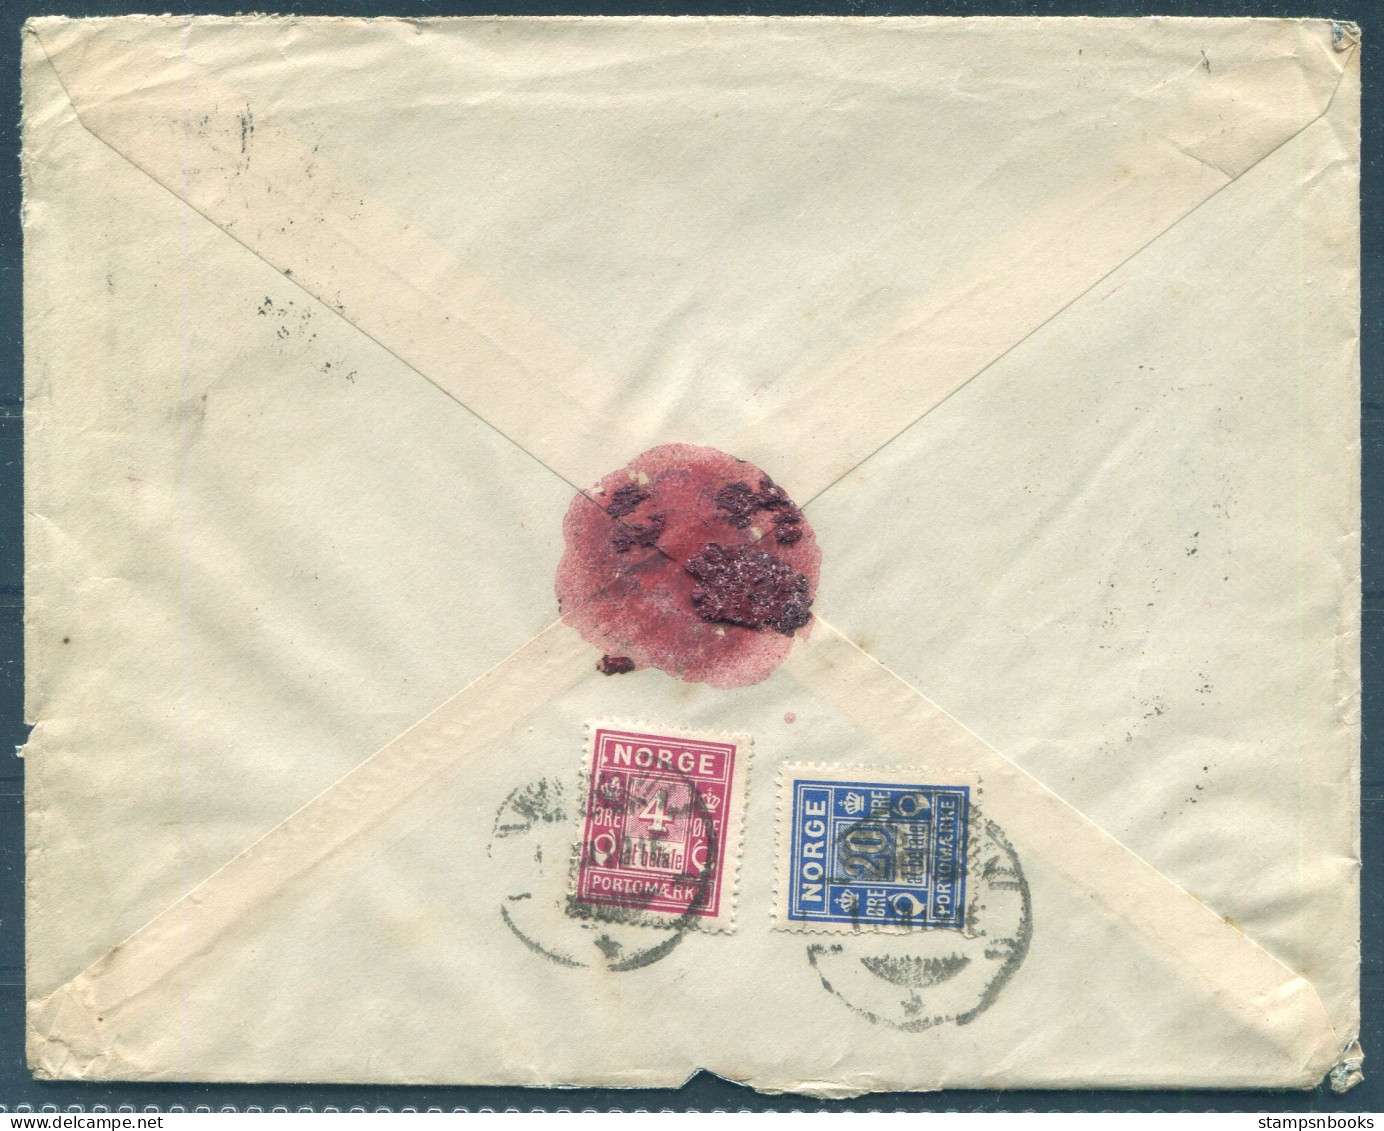 1919 Germany Breslau Postage Due, Taxe Postomaerke Cover - Kristiania Norway - Cartas & Documentos